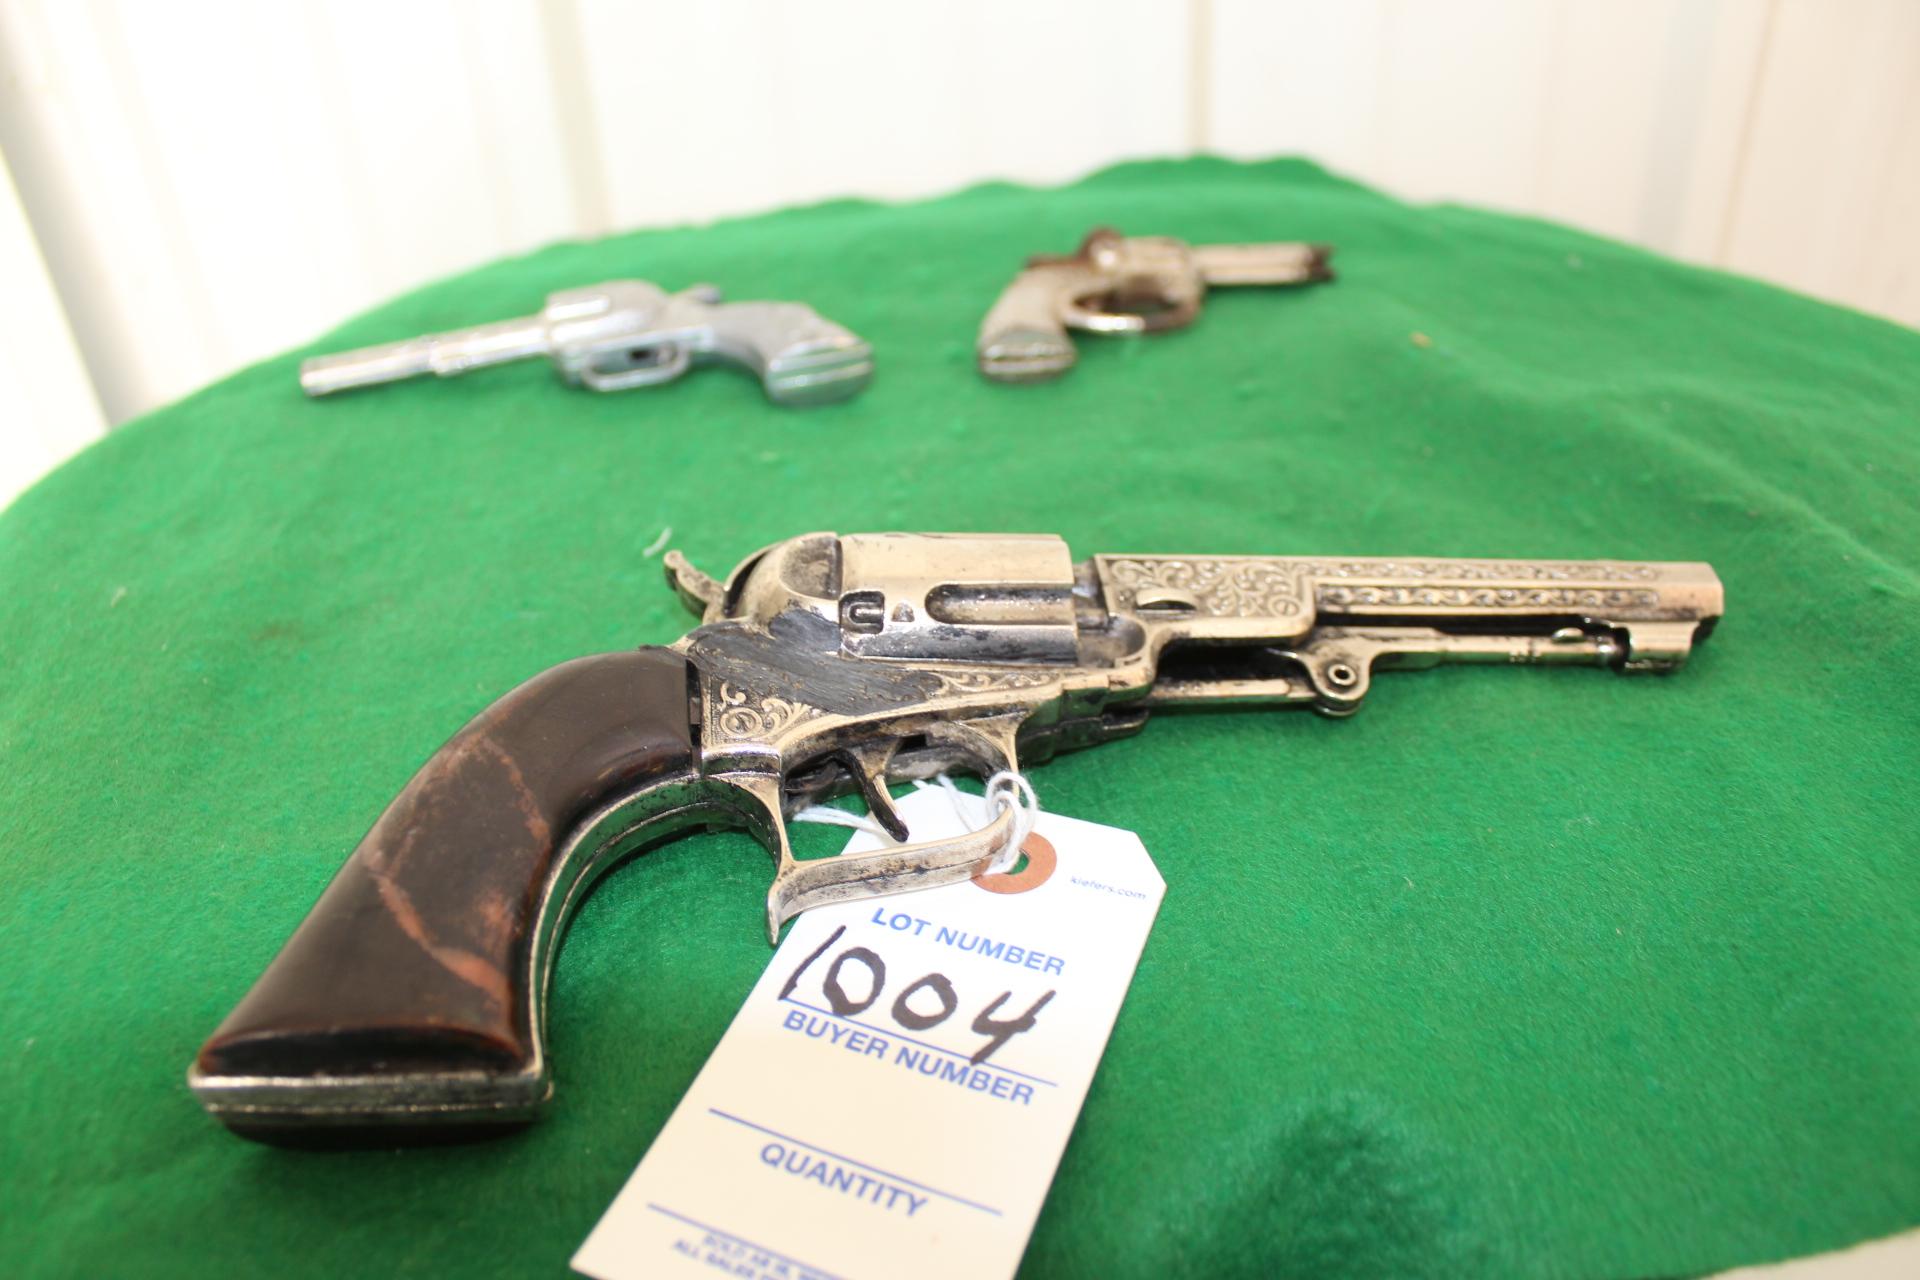 (3) Toy replica revolvers